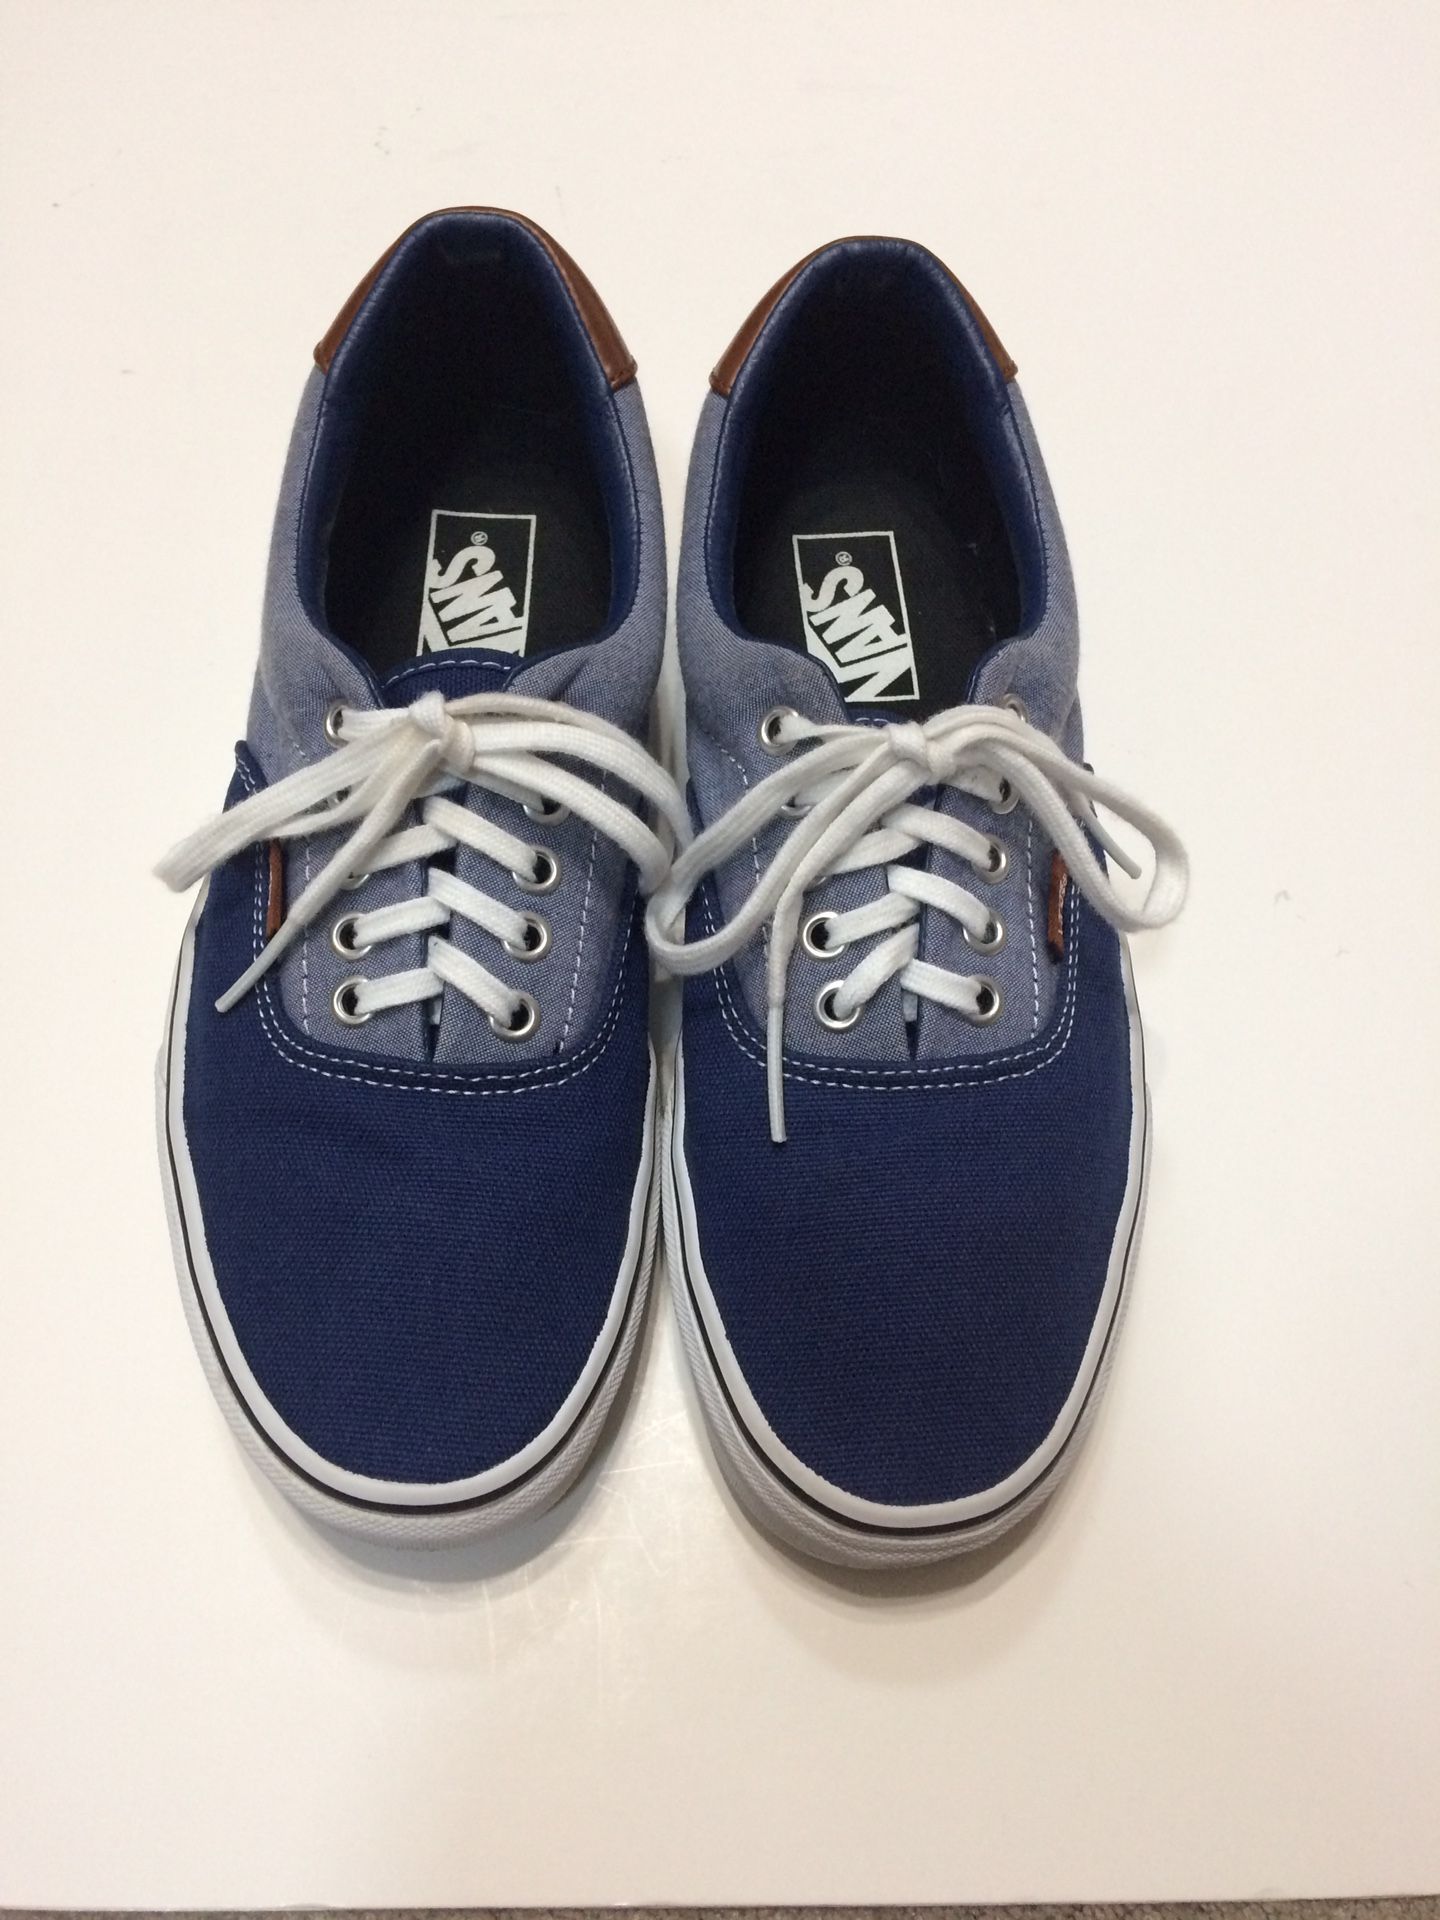 Vans Era Two Tone Blue Sneakers